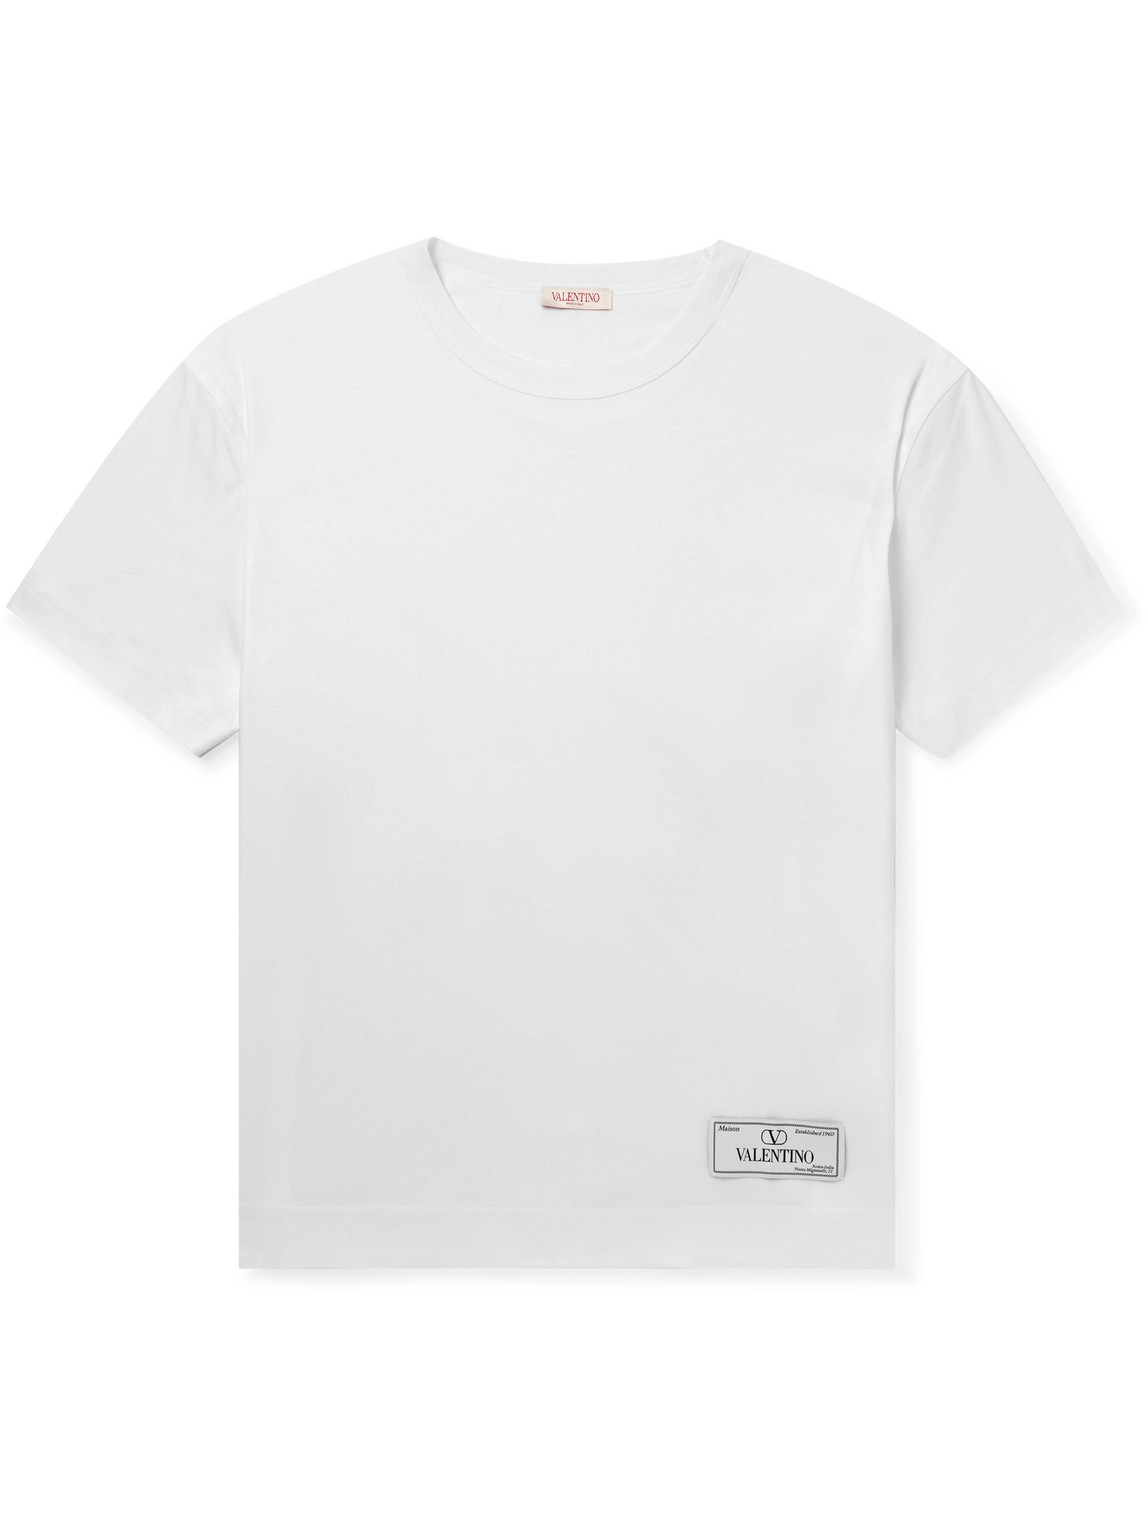 Valentino Garavani - Logo-Appliquéd Cotton-Jersey T-Shirt - Men - White - L von Valentino Garavani